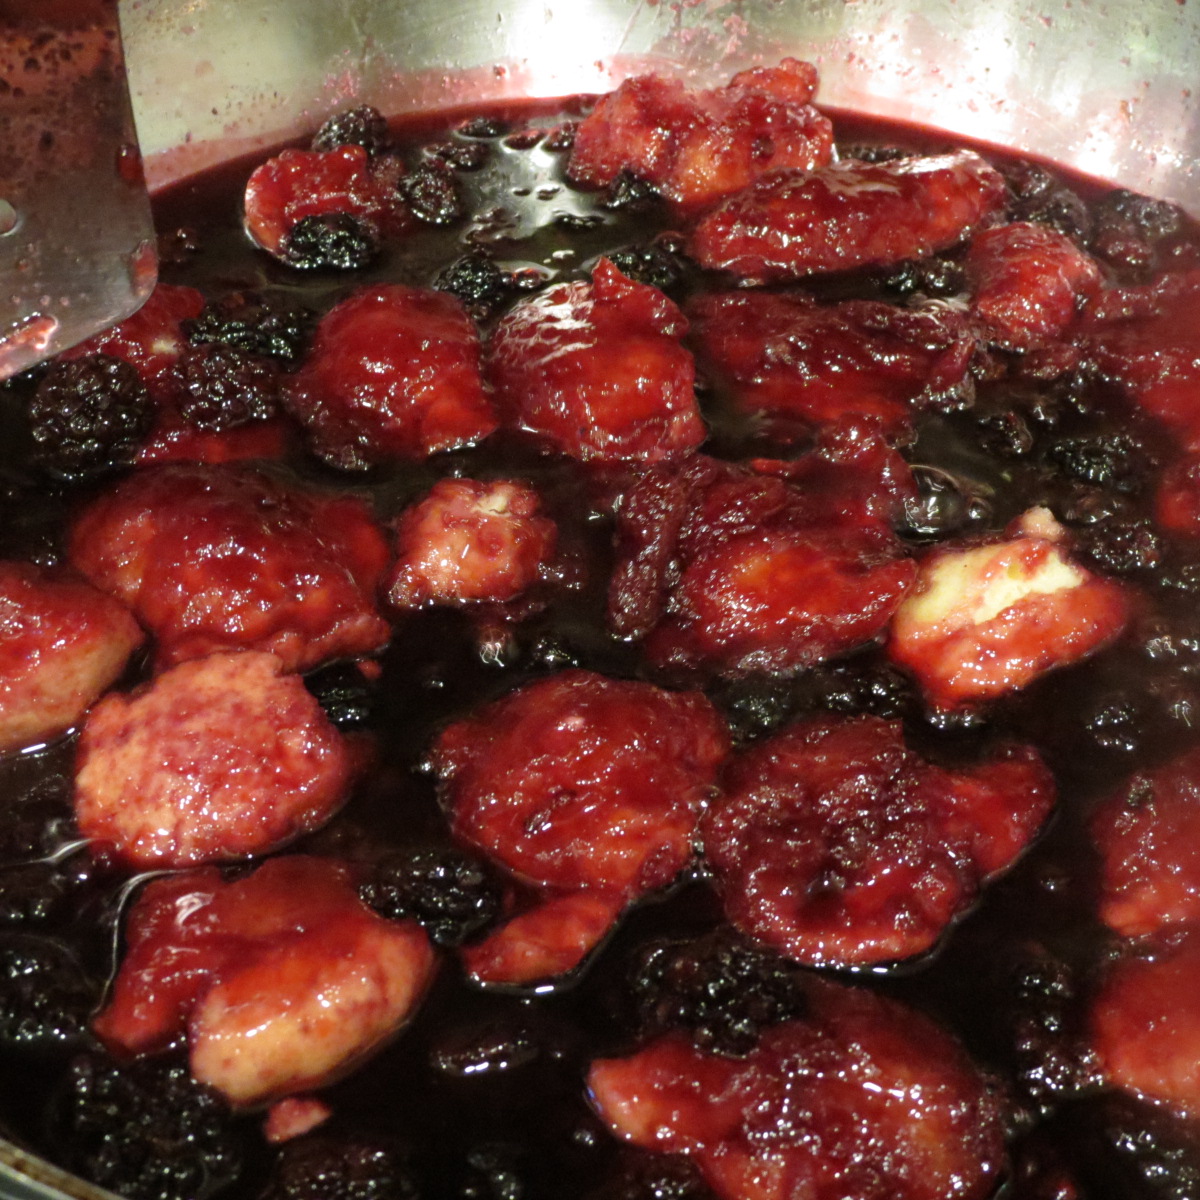 A saucepan of cooked blackberry dumplings.